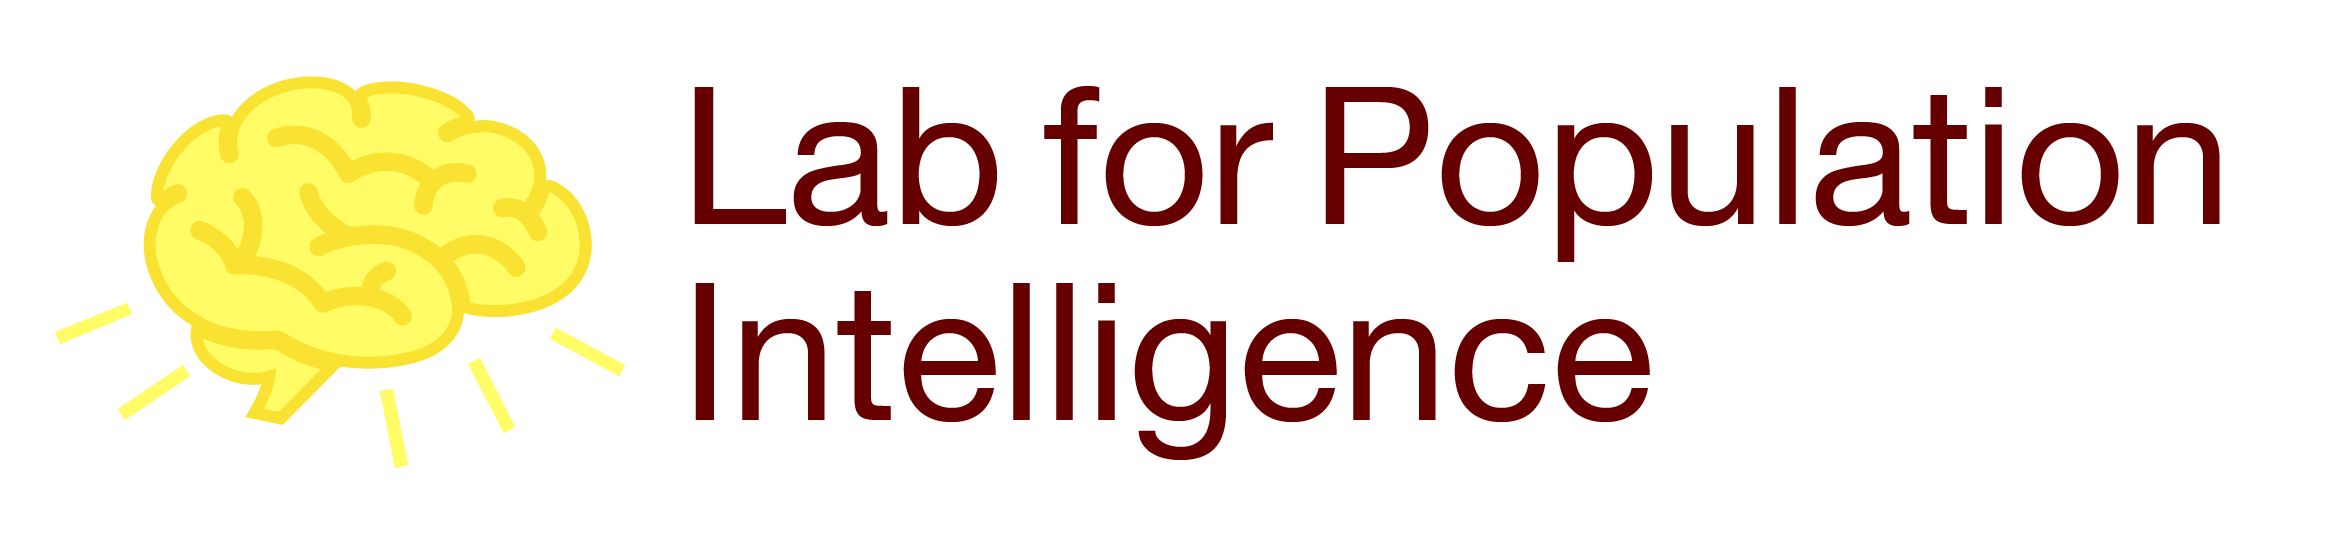 Lab for Population Intelligence Logo